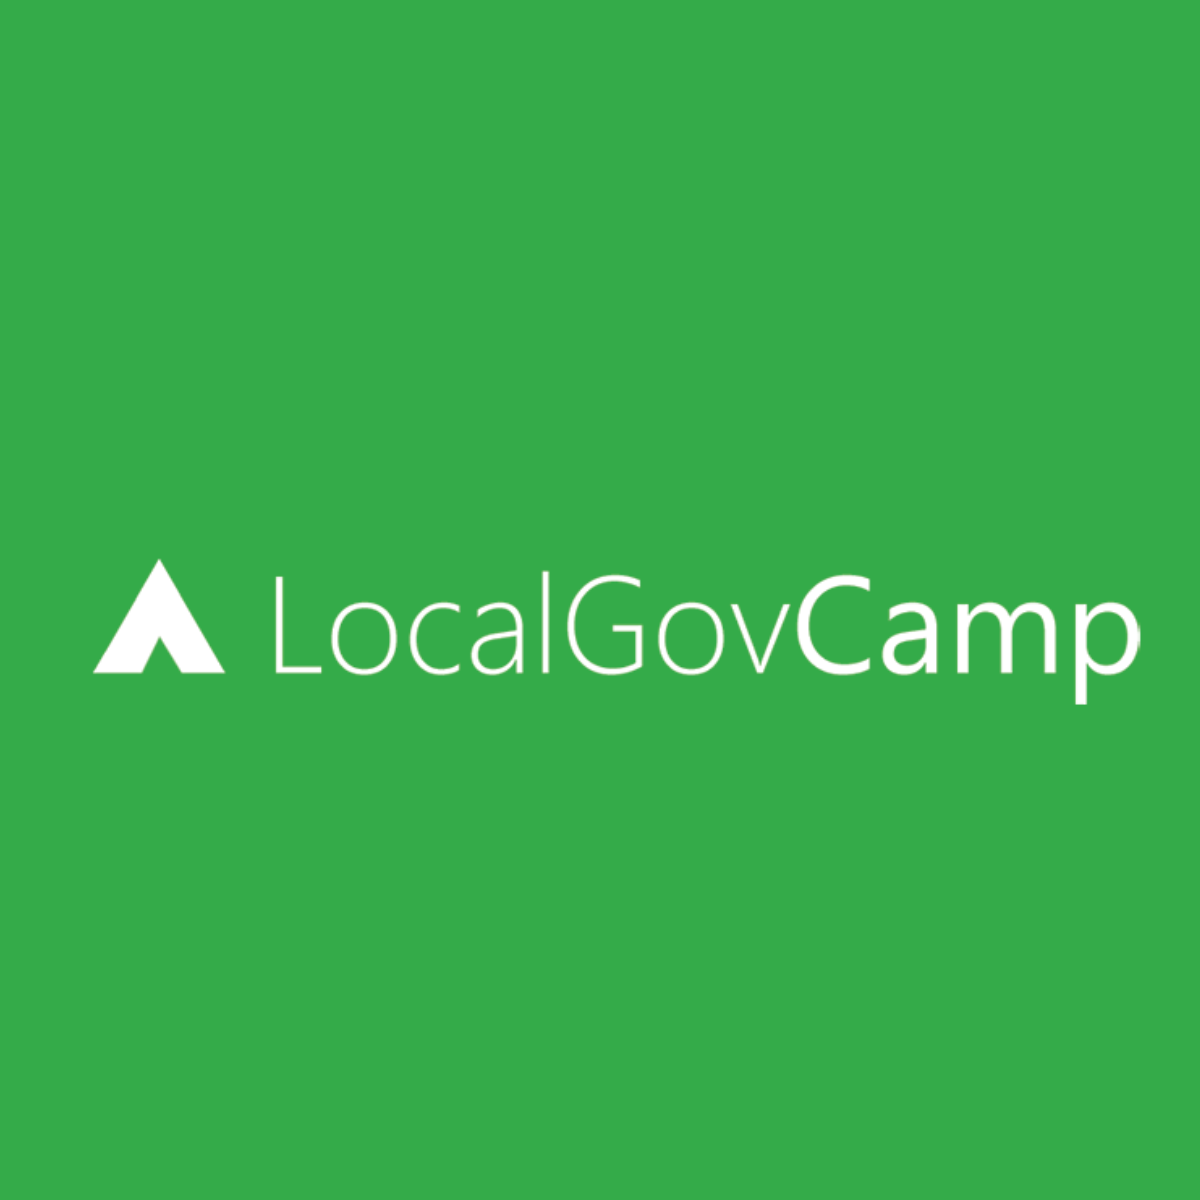 LocalGovCamp